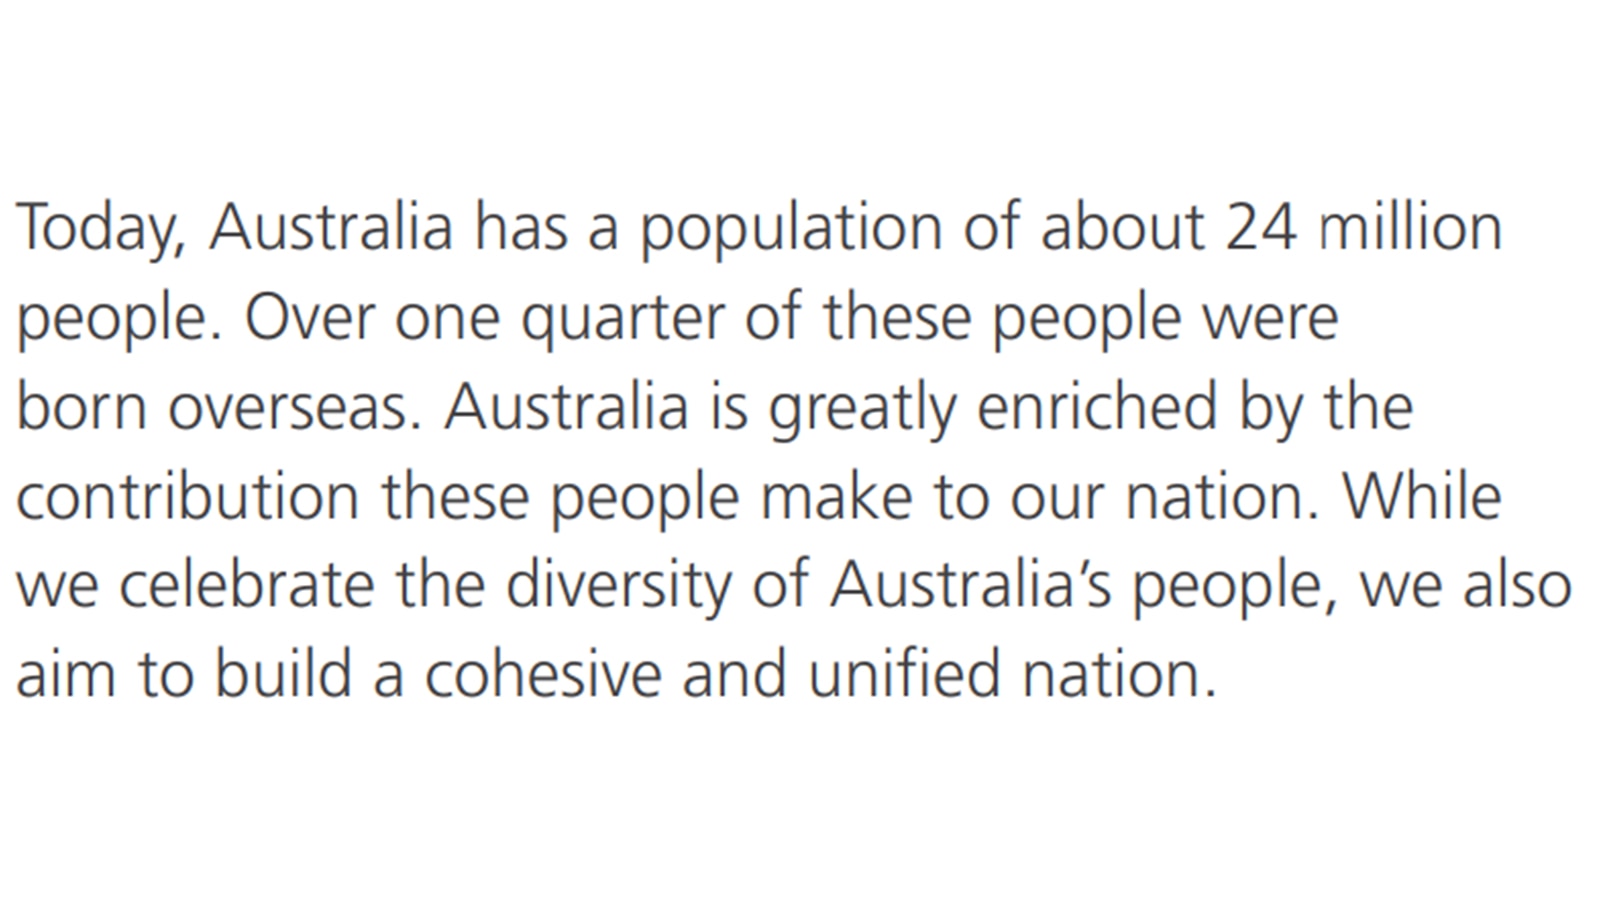 навес нищожен яснота australian citizenship our common bond Unite ранозреен